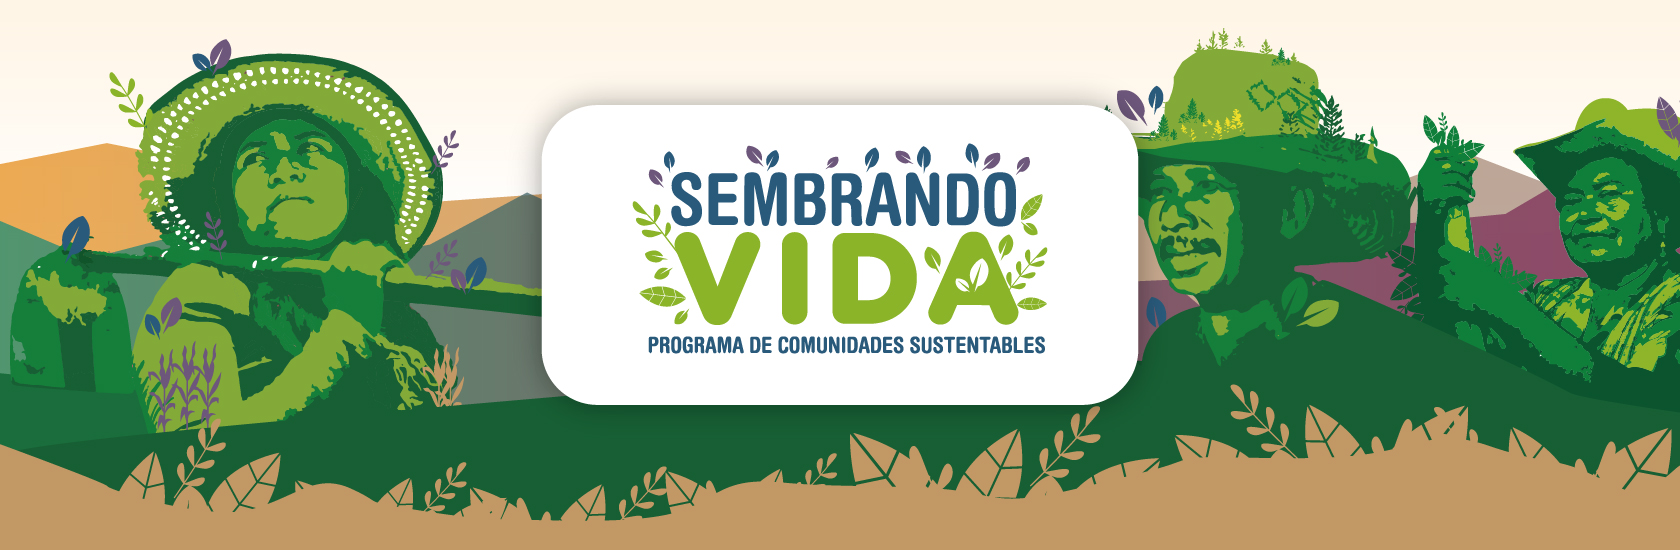 Banner Sembrando Vida 1680x550 2 